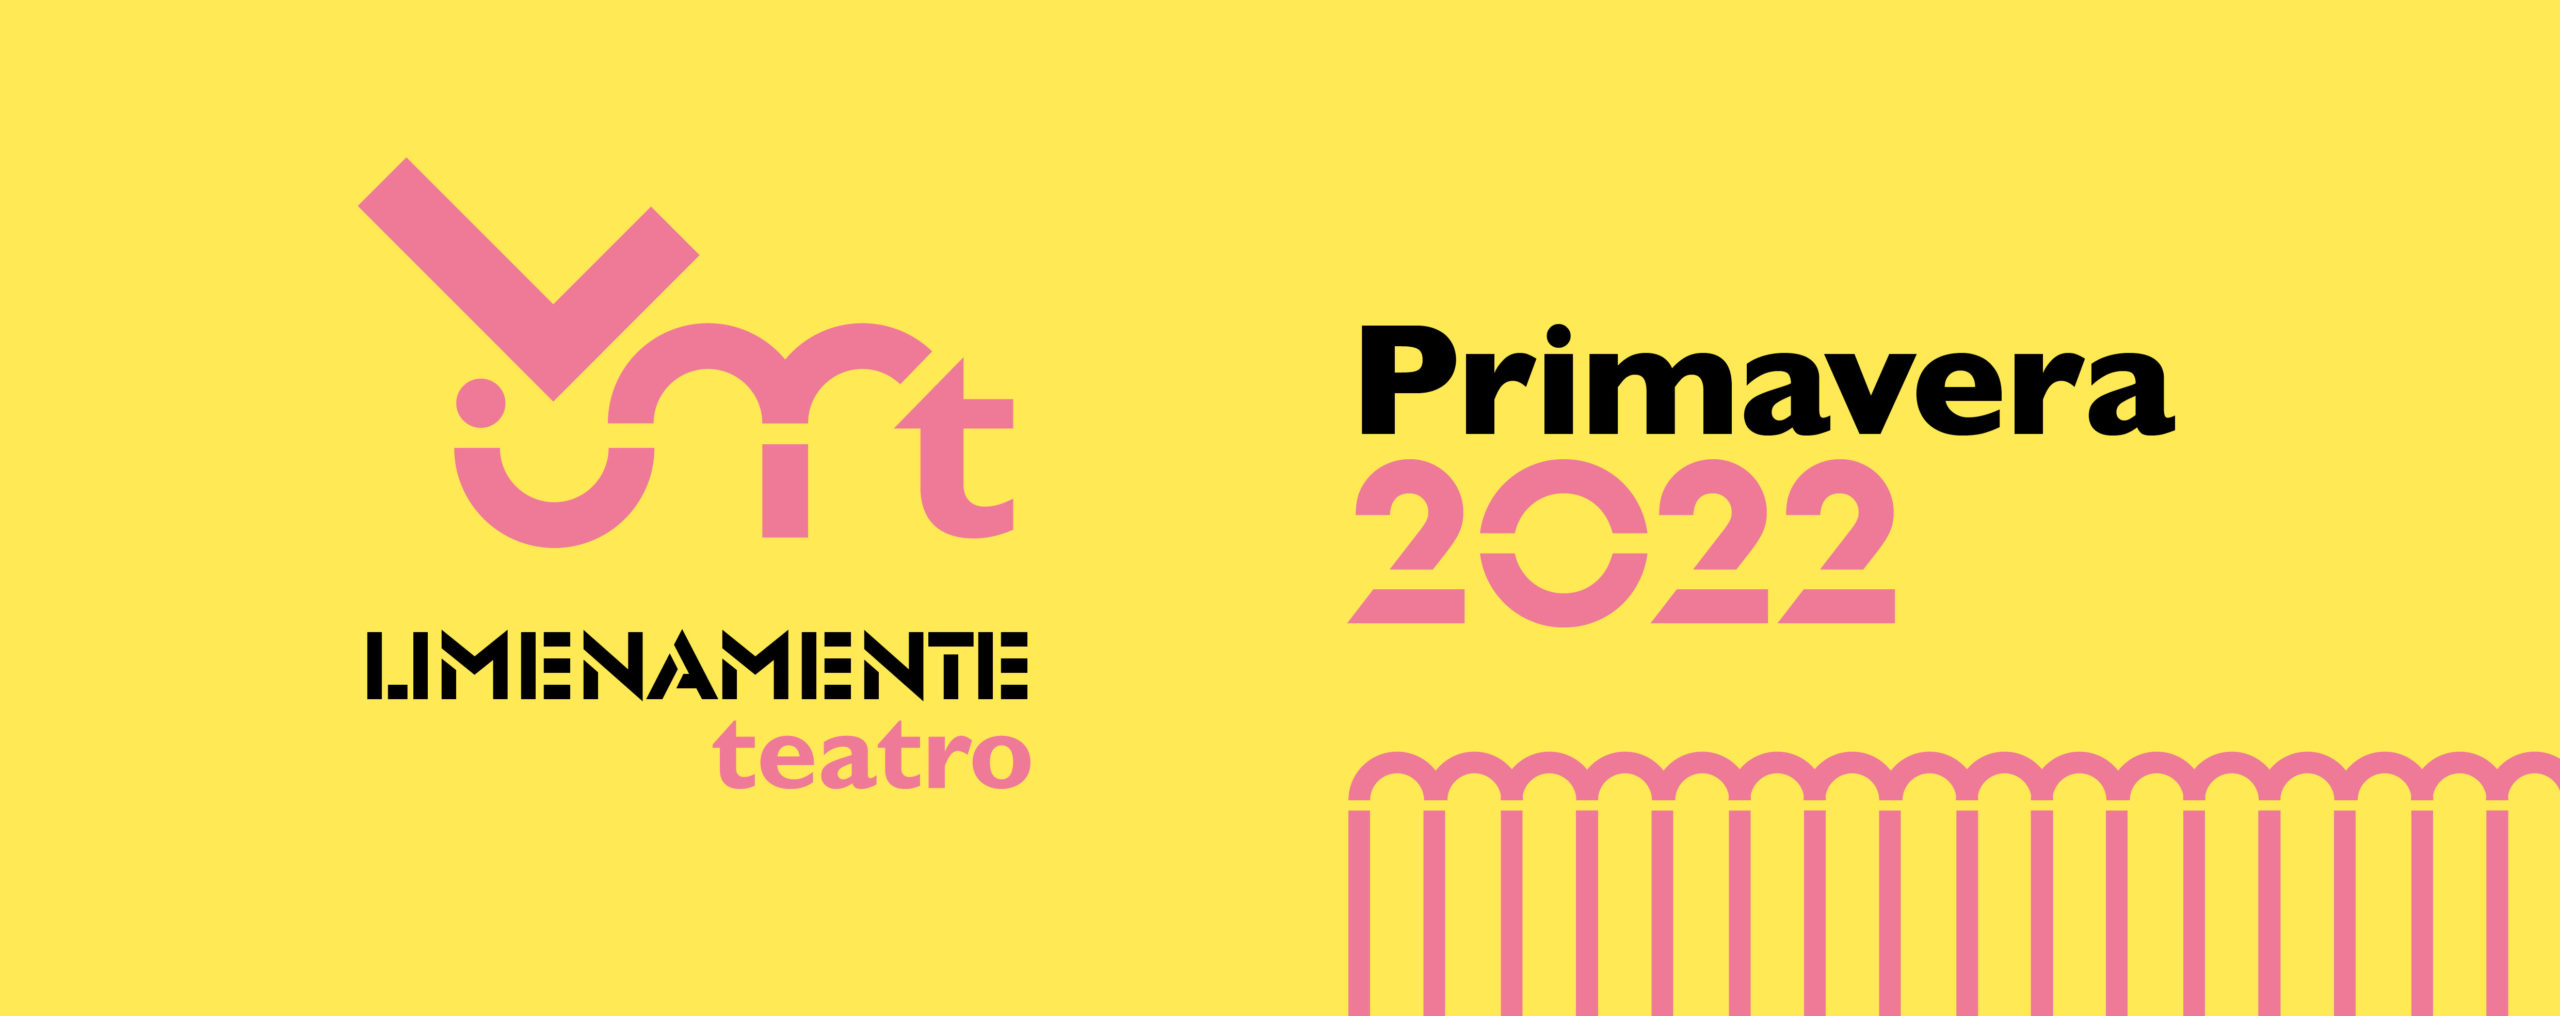 Limenamente Teatro Primavera 2022